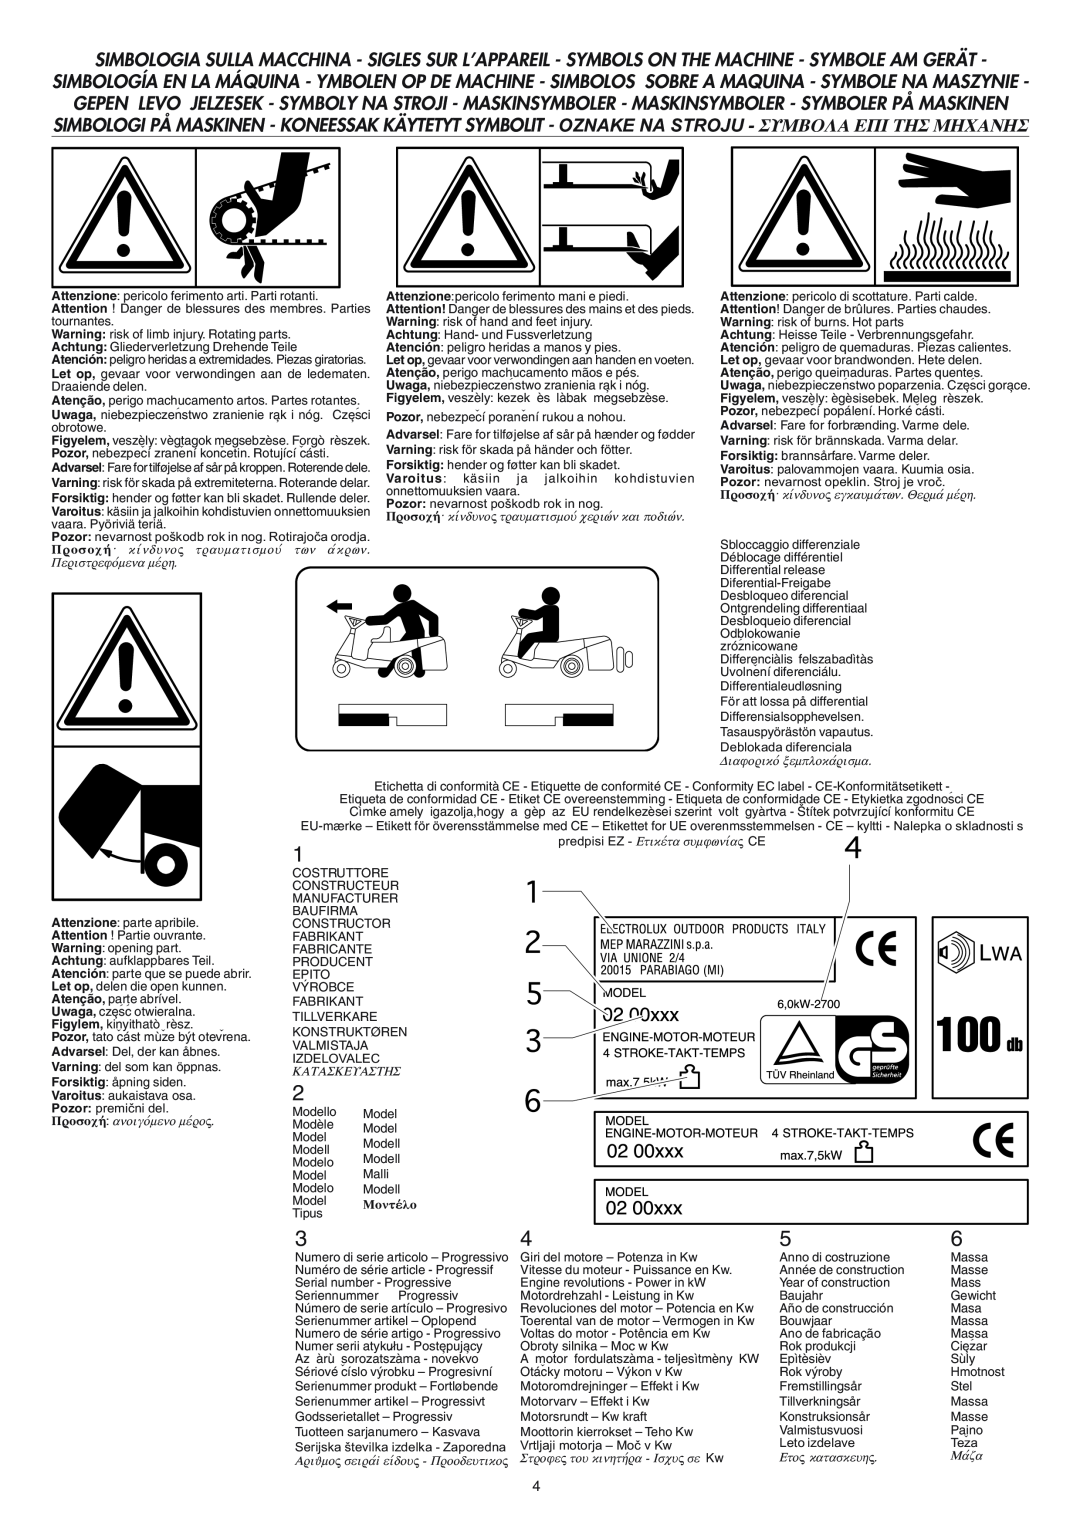 Electrolux 95387831900, 125H instruction manual Warning risk of limb injury. Rotating parts 